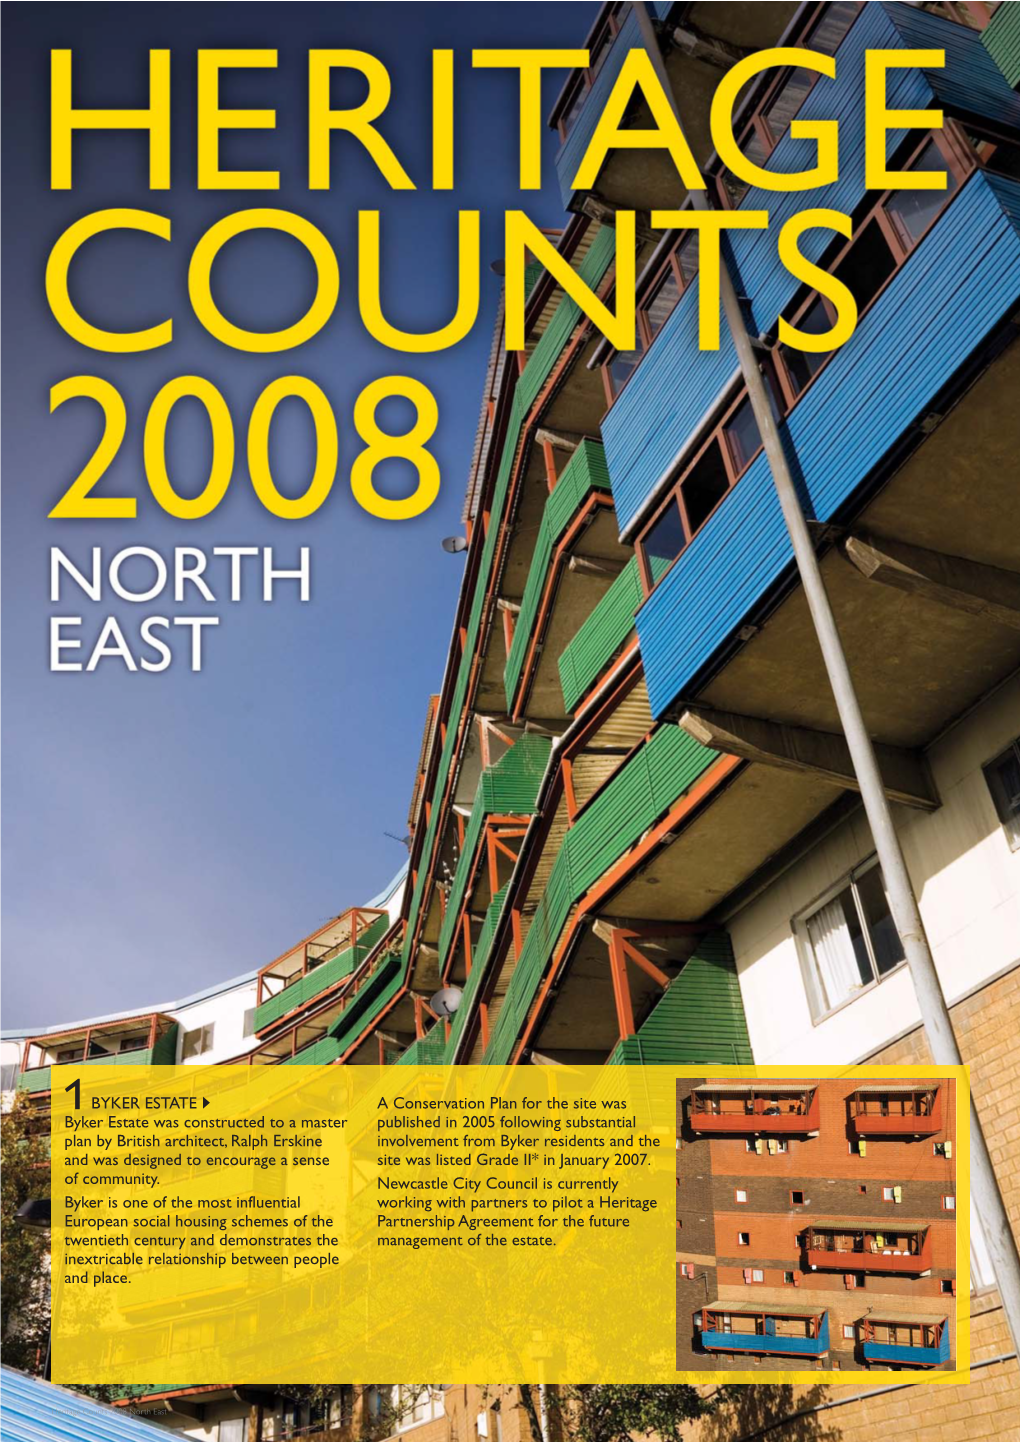 Heritage Counts 2008